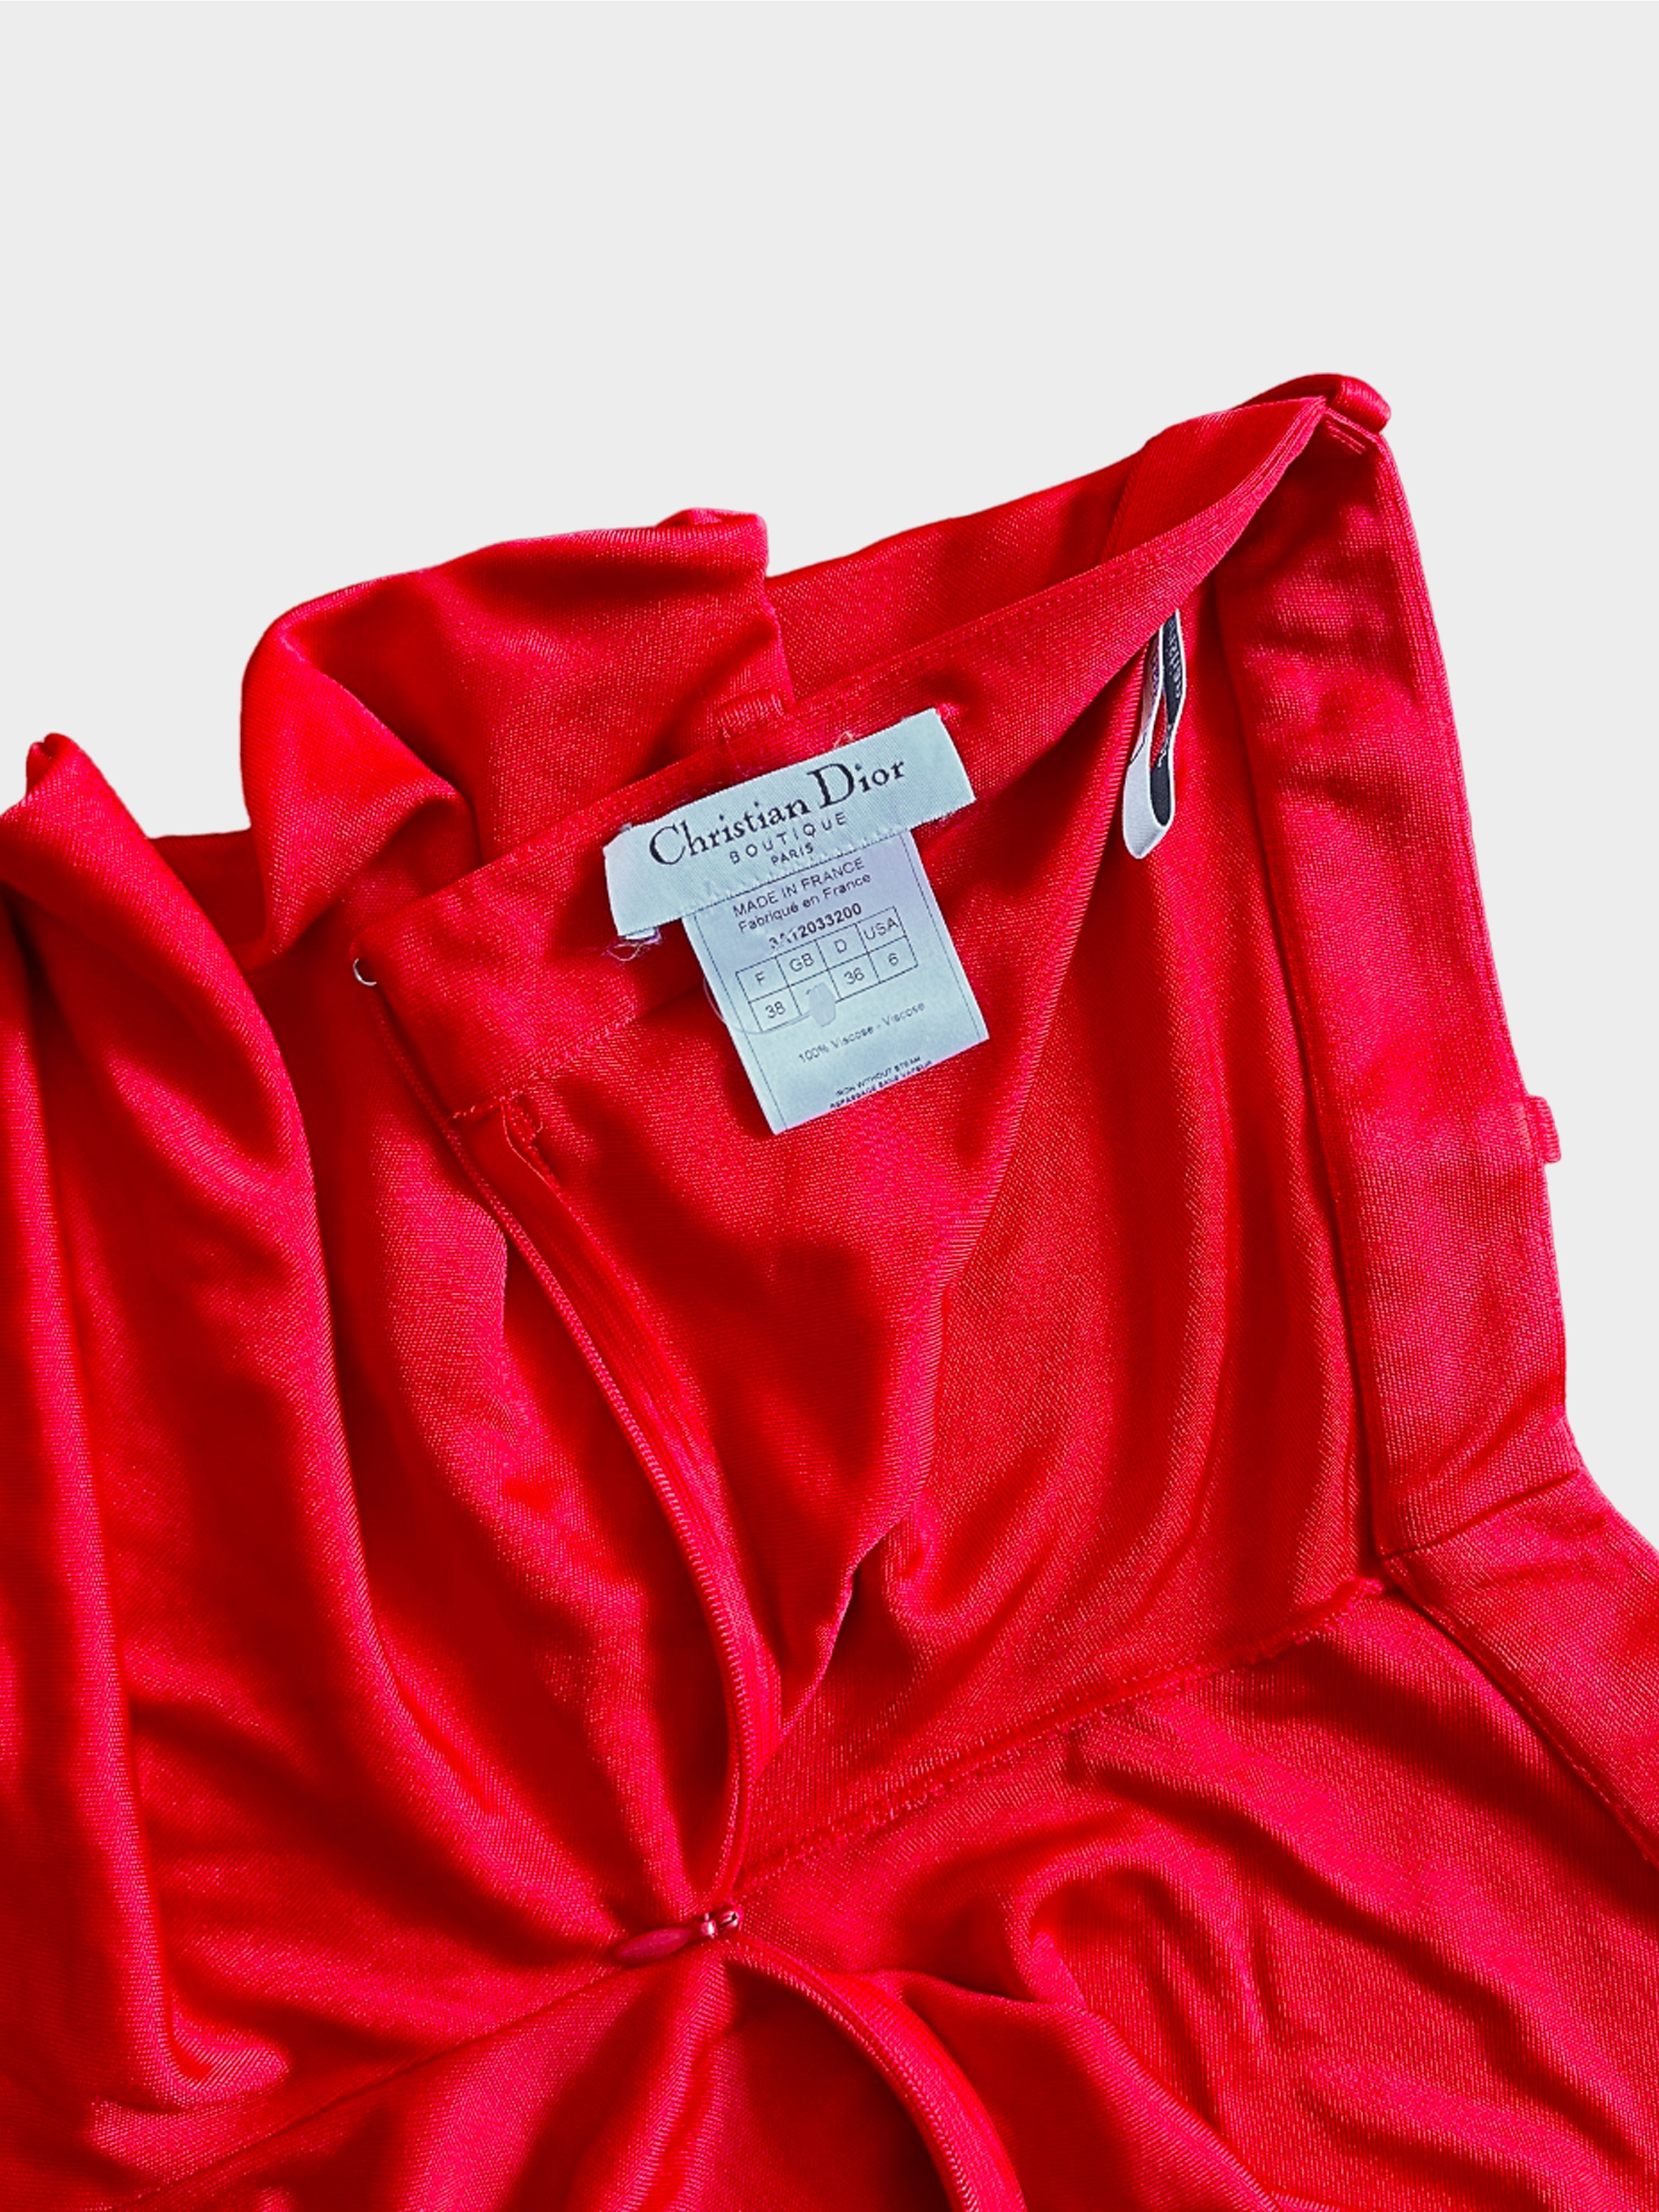 Christian Dior by John Galliano FW 2003 Red Viscose Ruffled Skirt